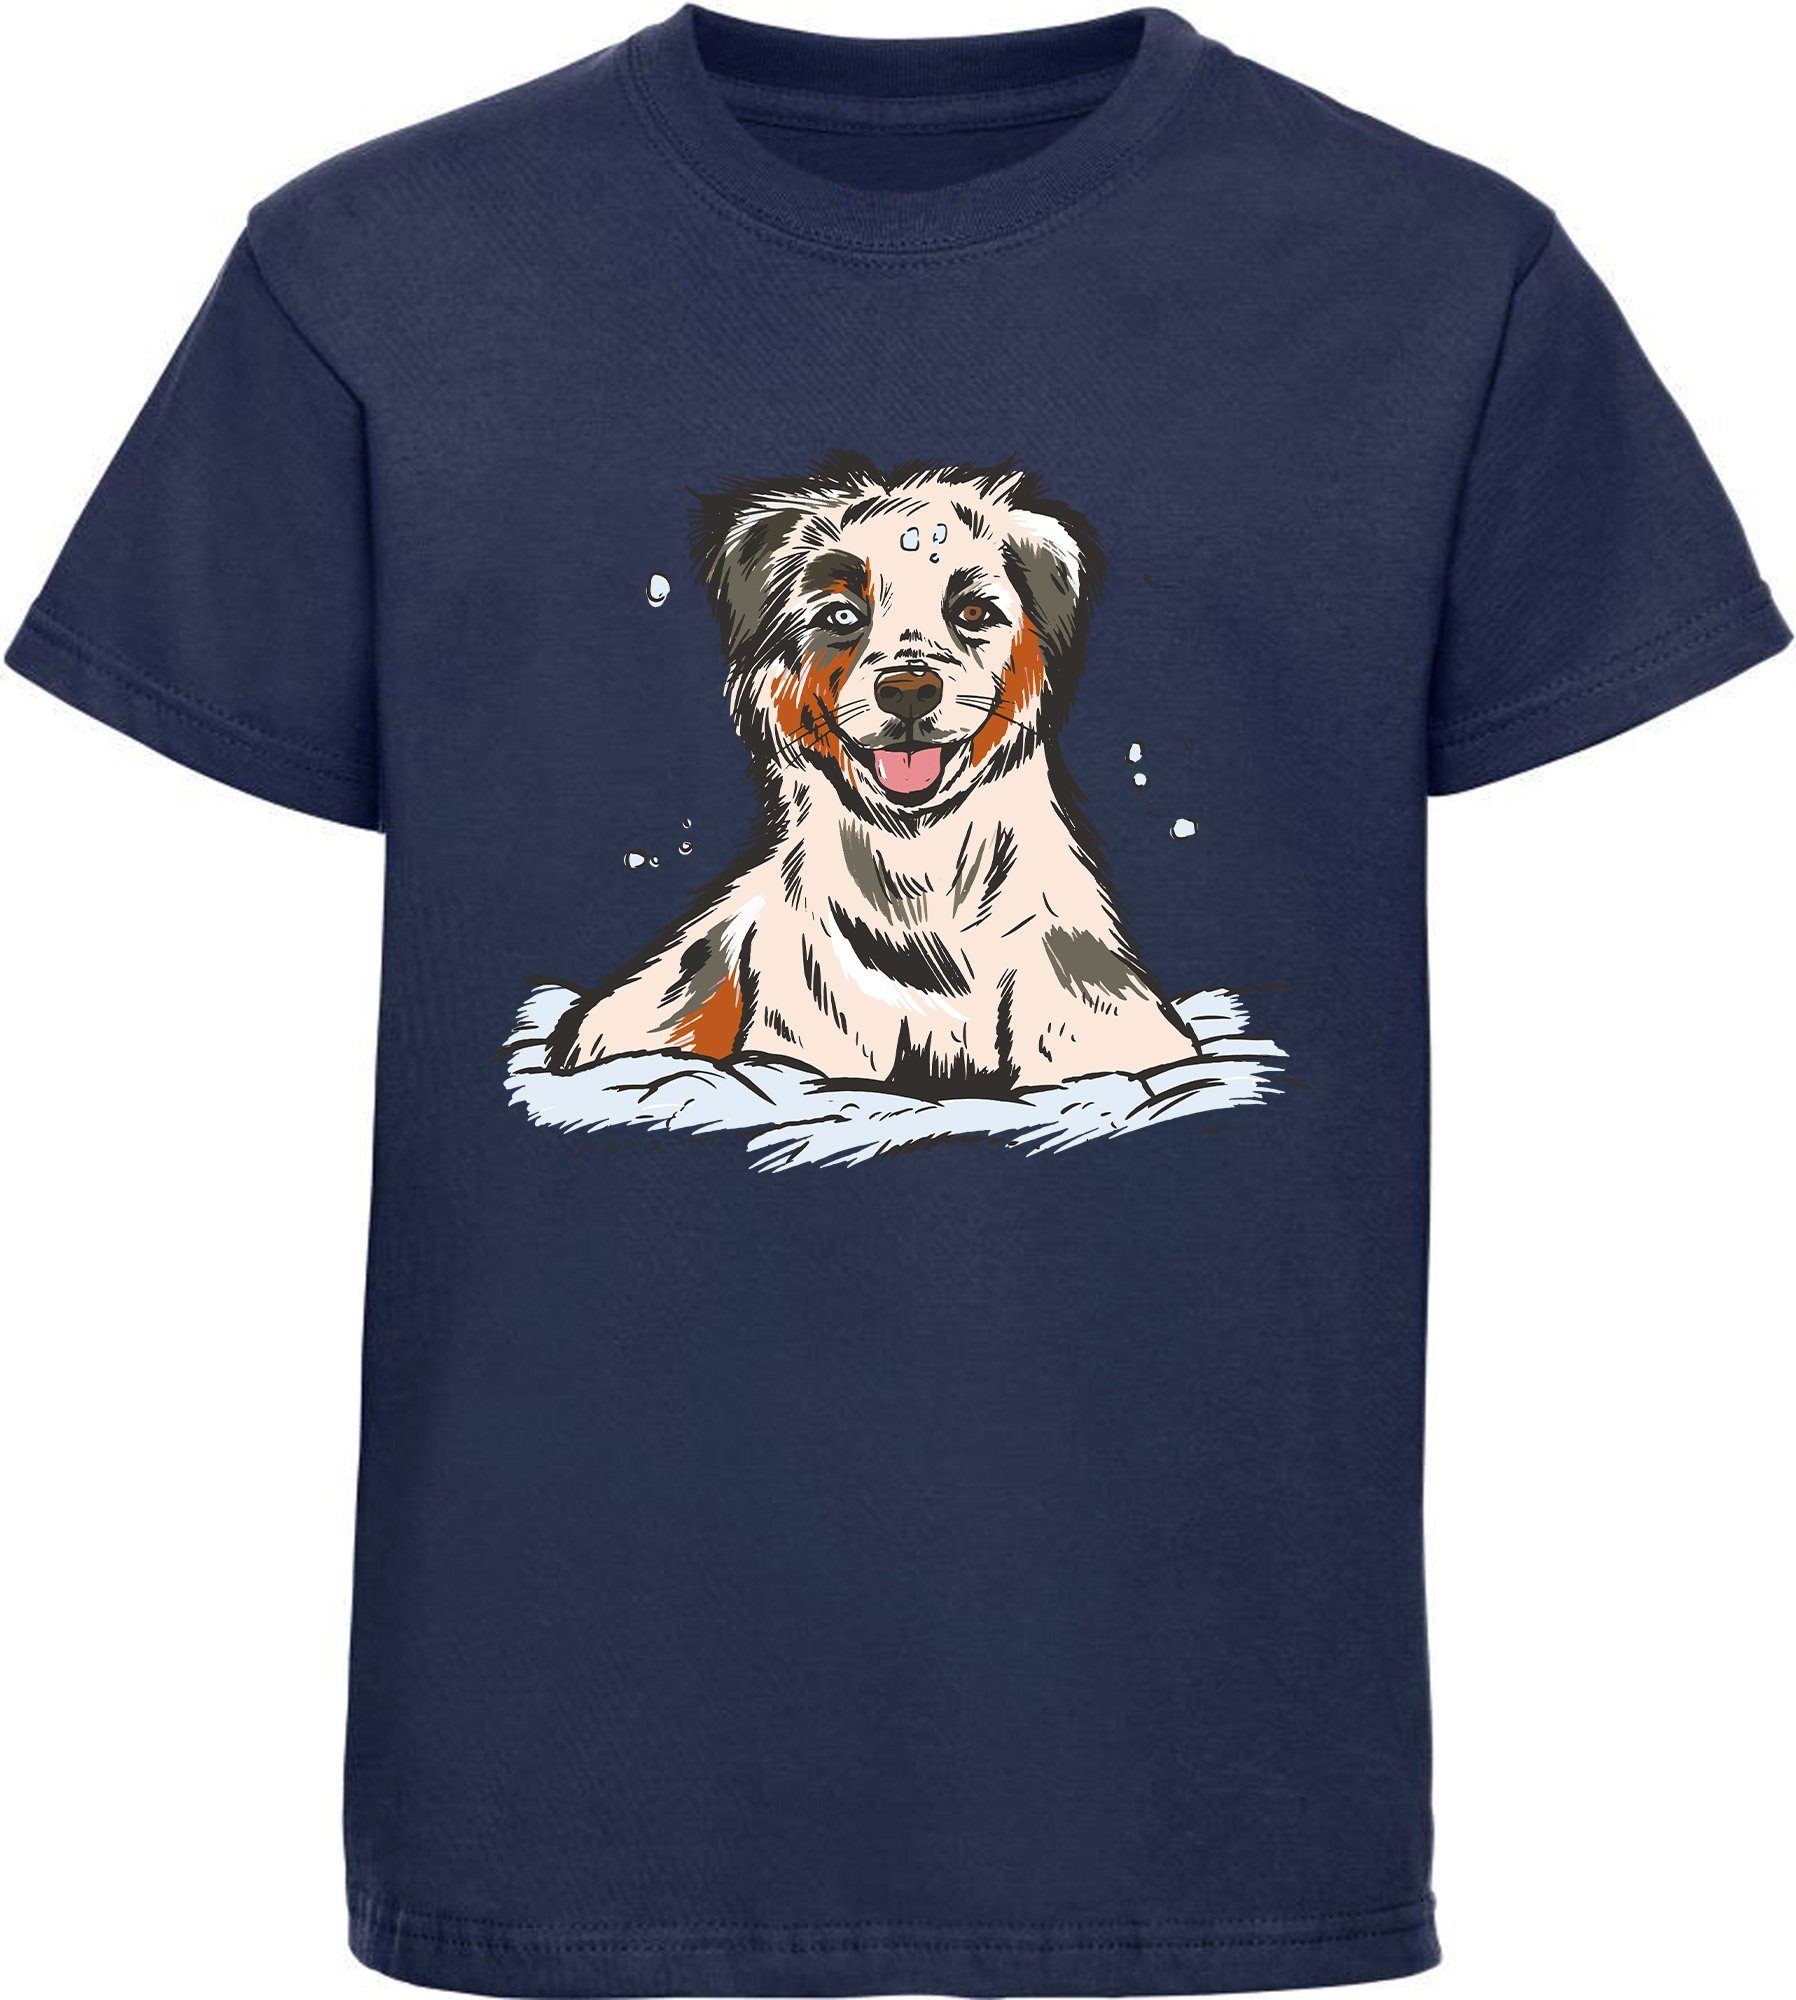 MyDesign24 Print-Shirt bedrucktes Kinder und Jugend Hunde T-Shirt Australian Shepherd Welpe Baumwollshirt mit Aufdruck, i216 navy blau